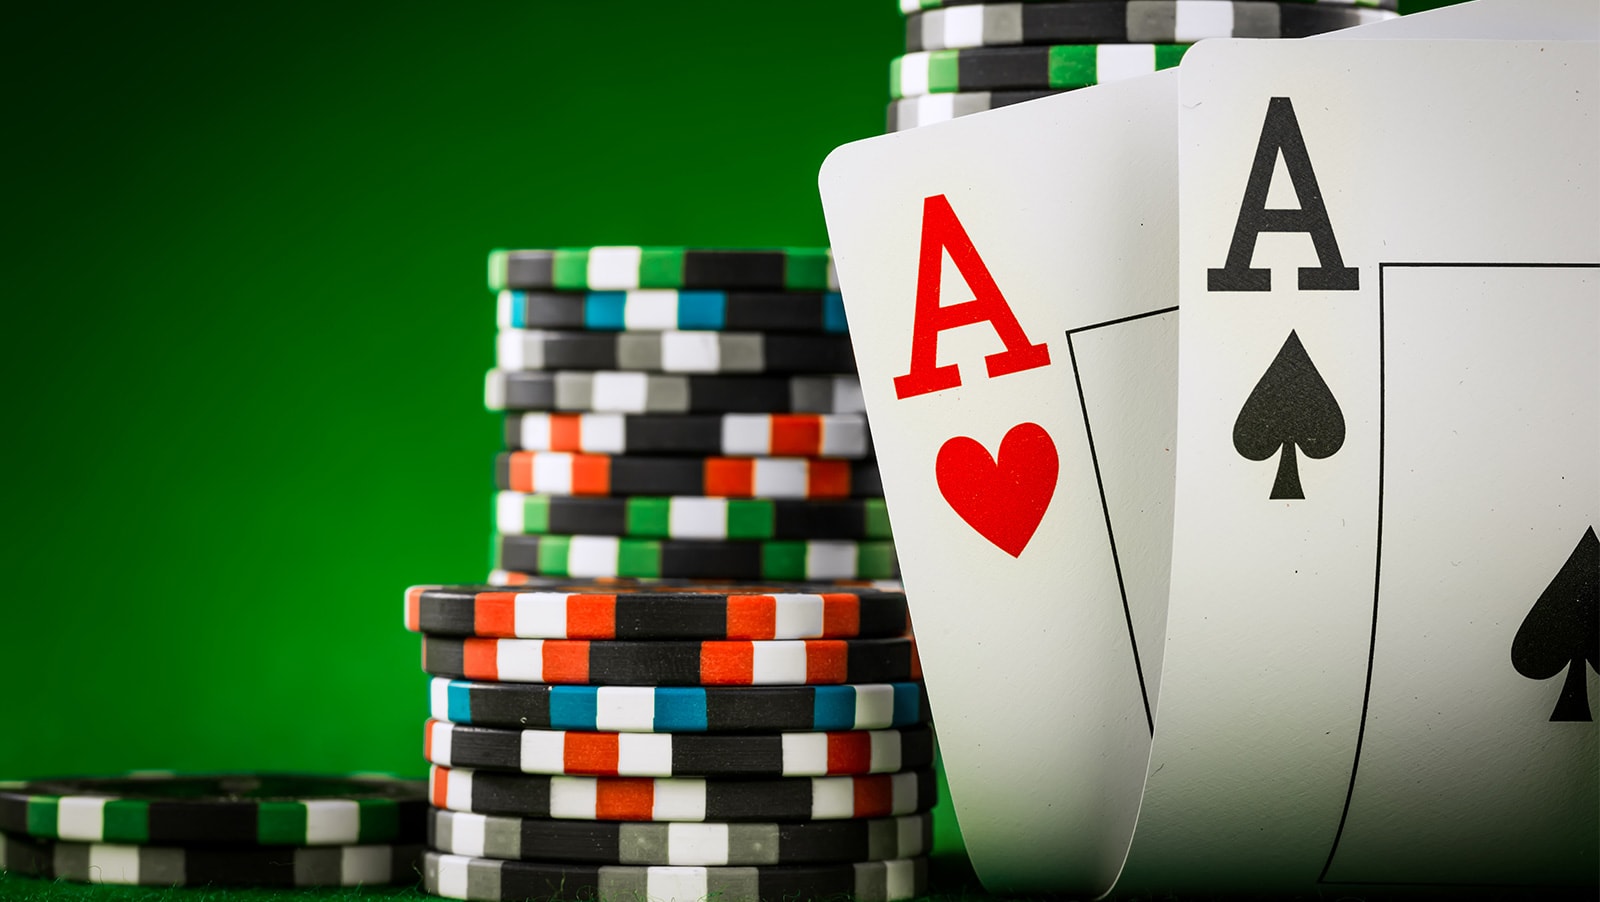 partypoker host Irish Open Online and host charity drive for freelance poker dealers - CalvinAyre.com